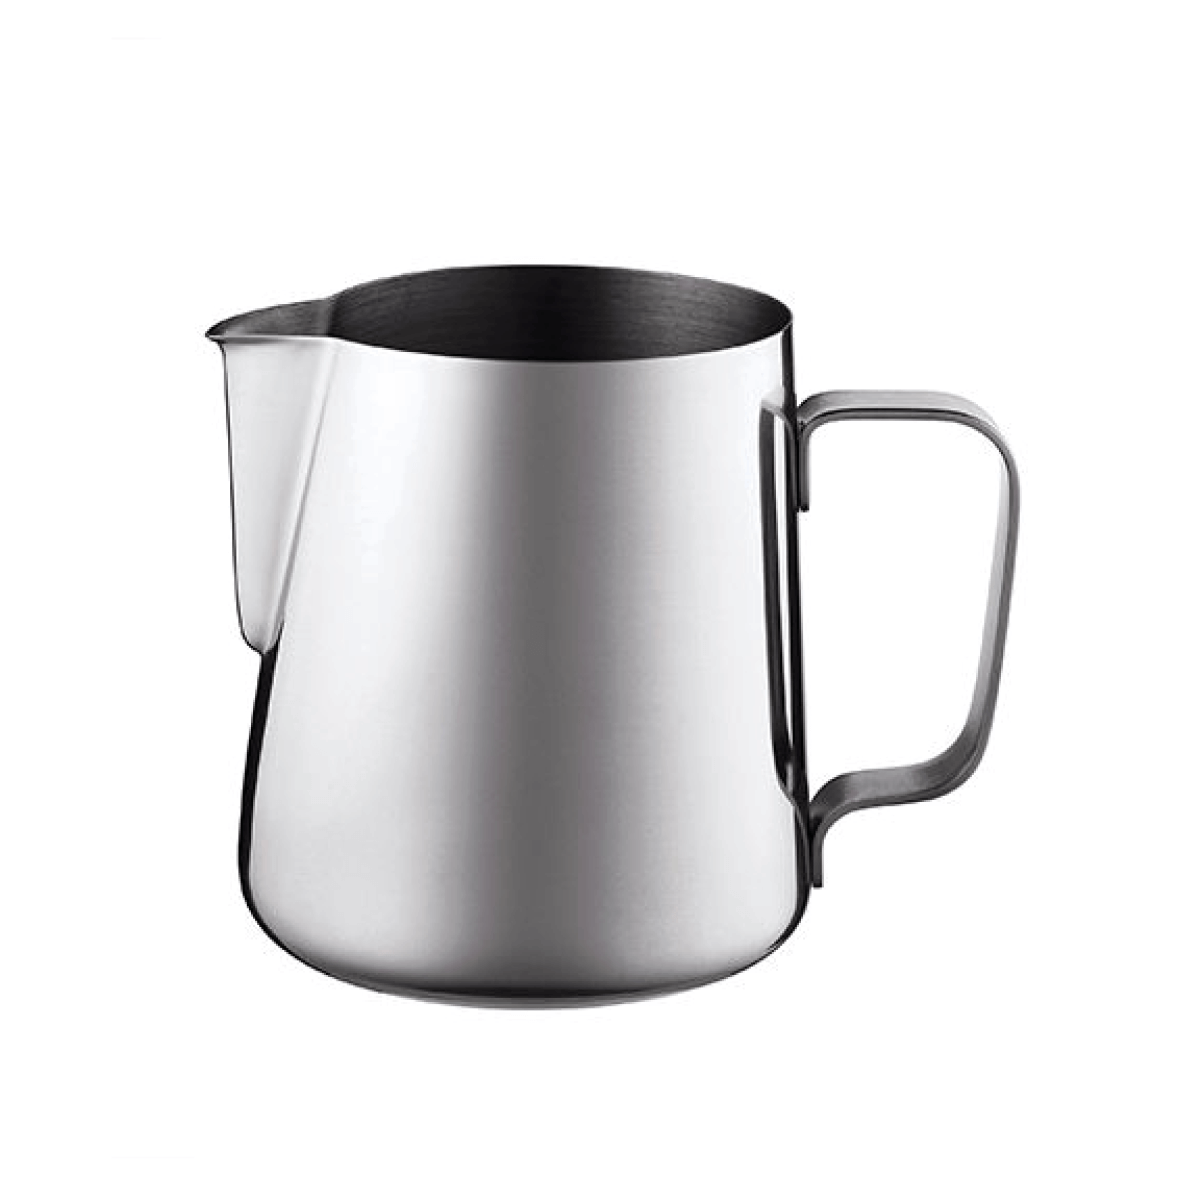 Milk jug (350ml)